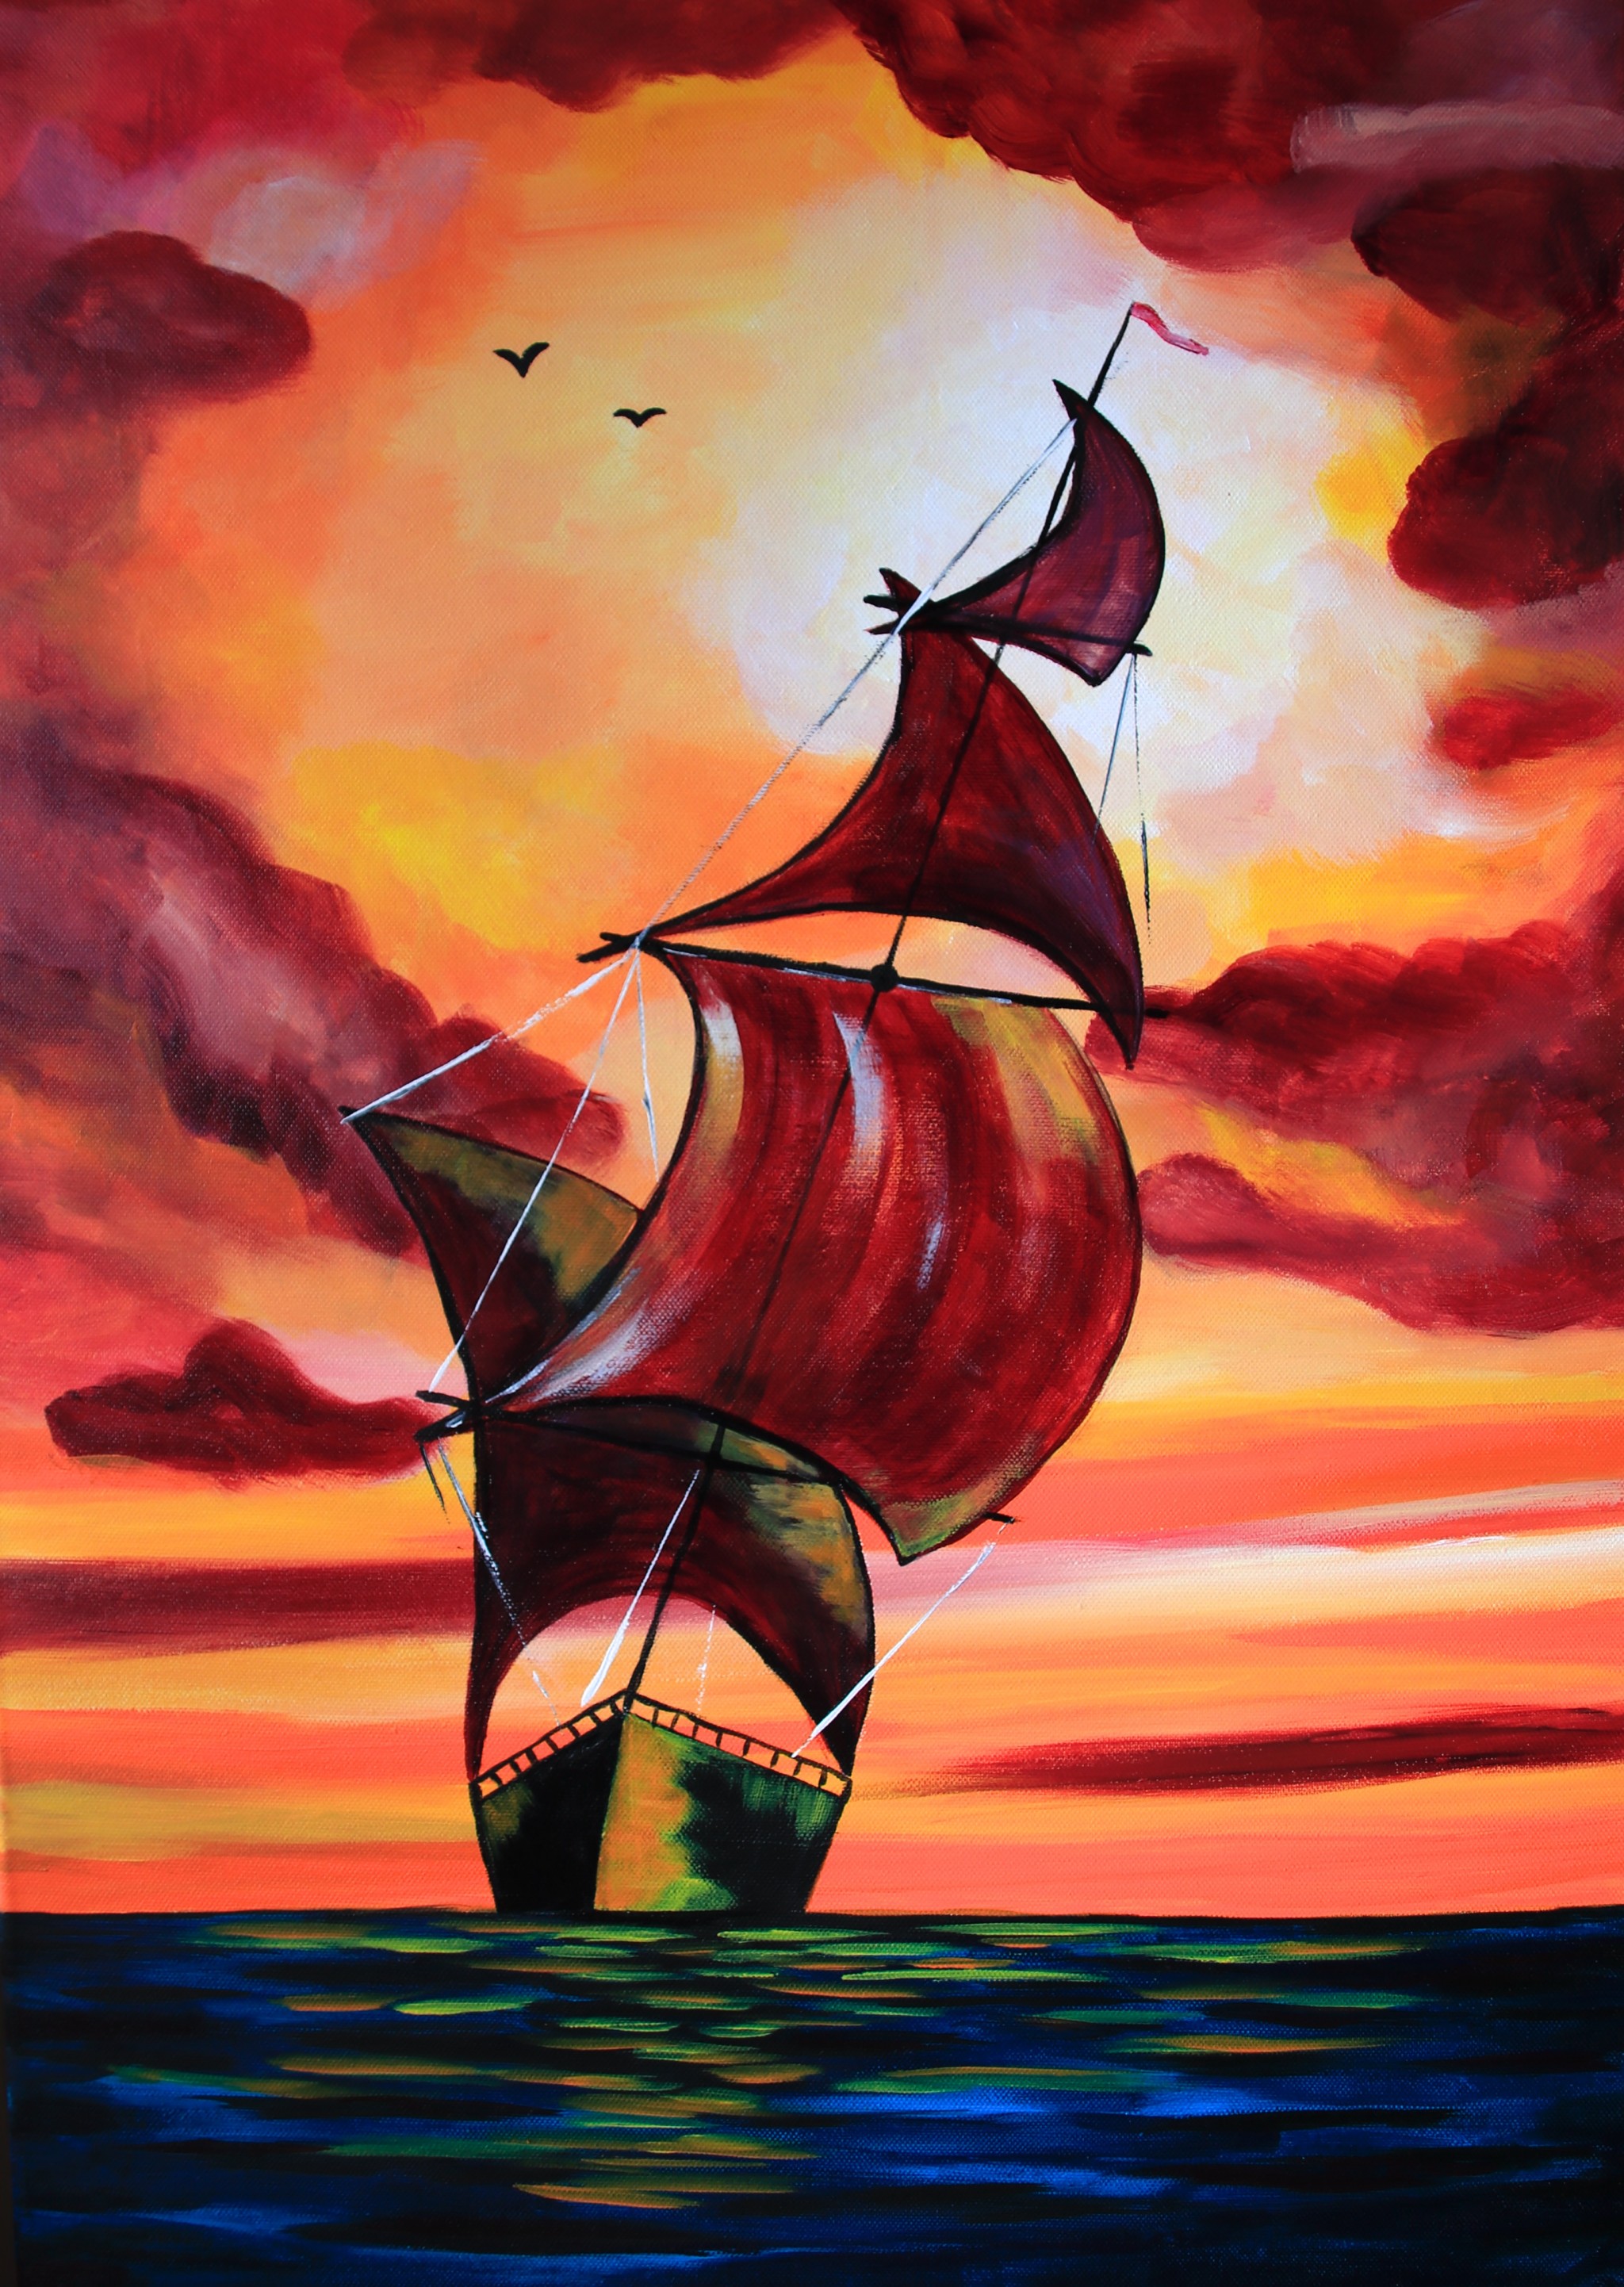 Weg segeln - Sonnenuntergang in einer maritimen Szene - 50x70 cm